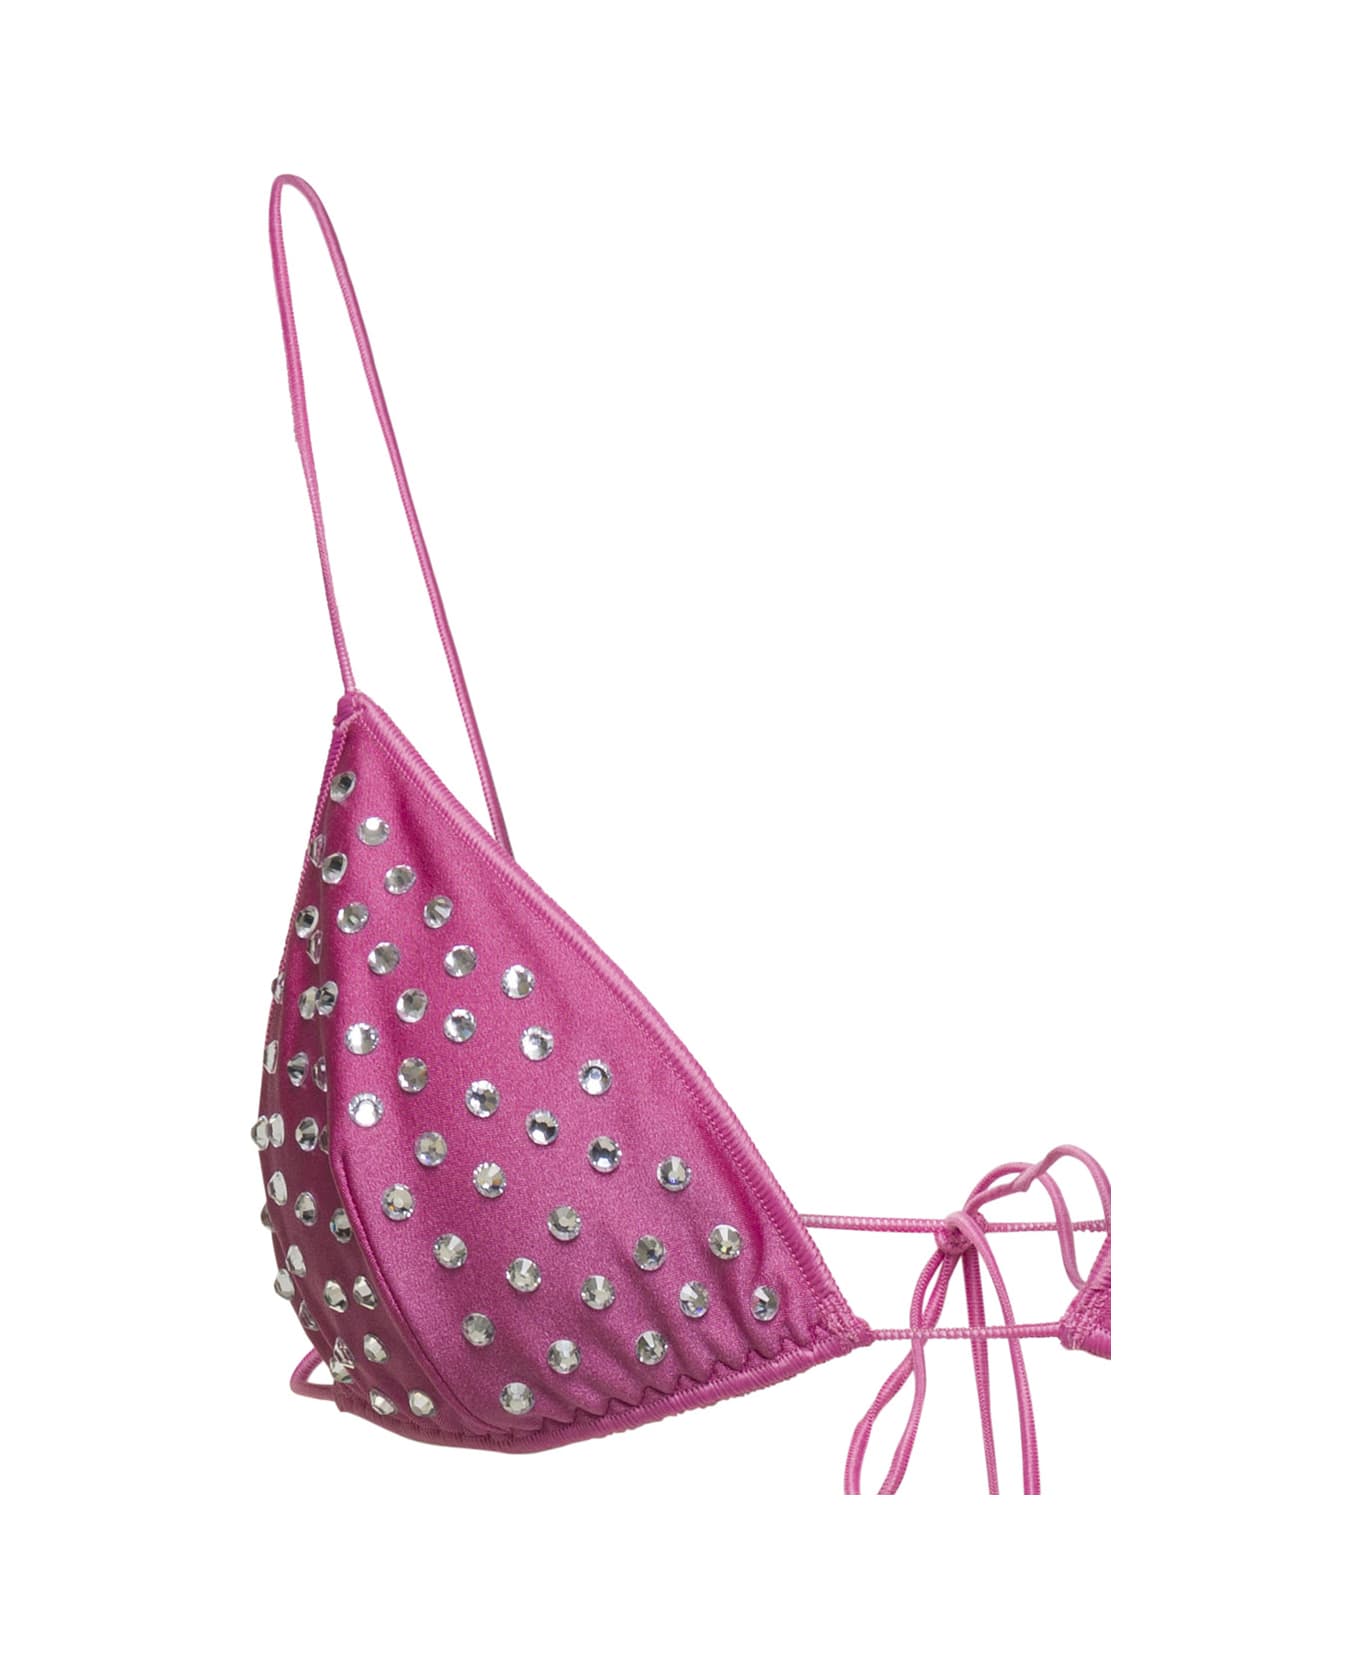 Oseree 'gem Two Piece' Pink Bikini Two Piece With Rhinestones In Stretch Polyamide Woman - Pink 水着